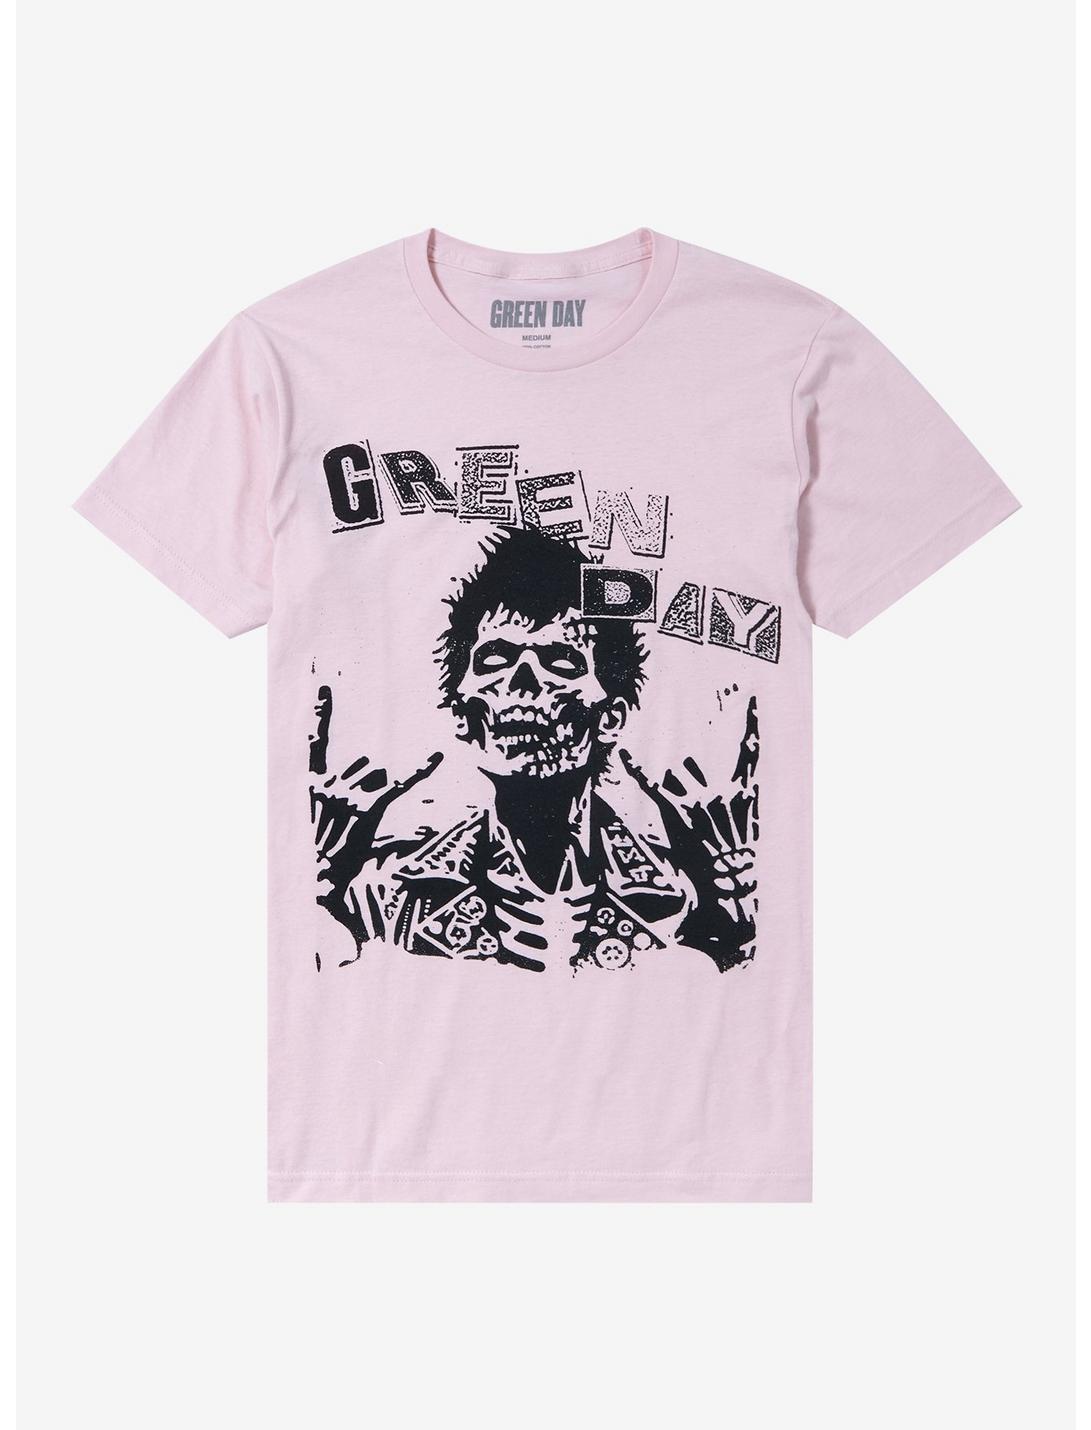 Green Day Zombie Rocker Pastel Boyfriend Fit Girls T-Shirt, PINK, hi-res